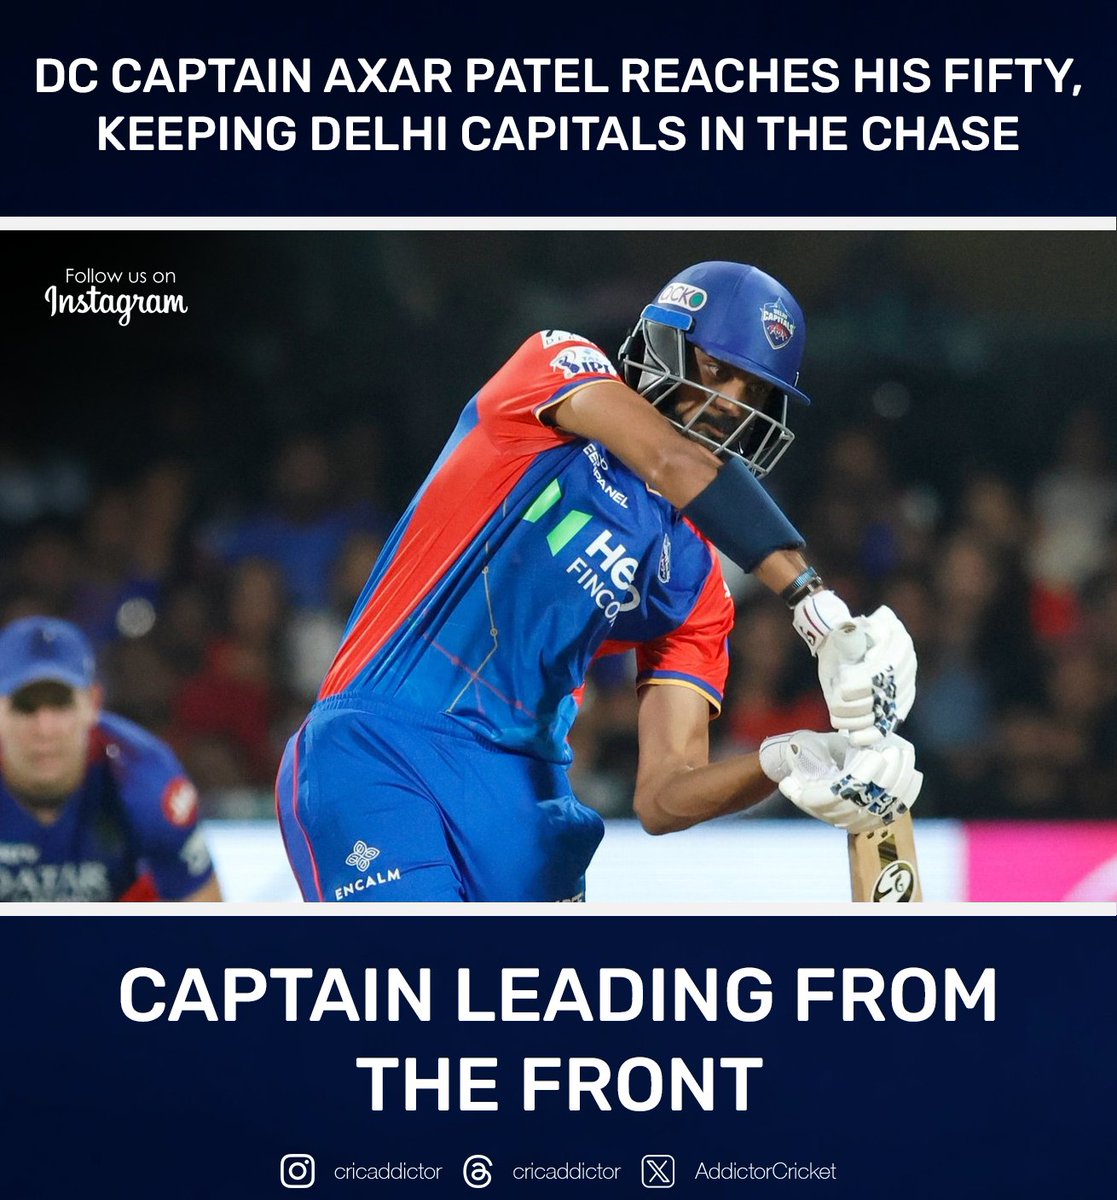 Well played Axar Patel

#RCBvDC #ipl24 #cricket #icc